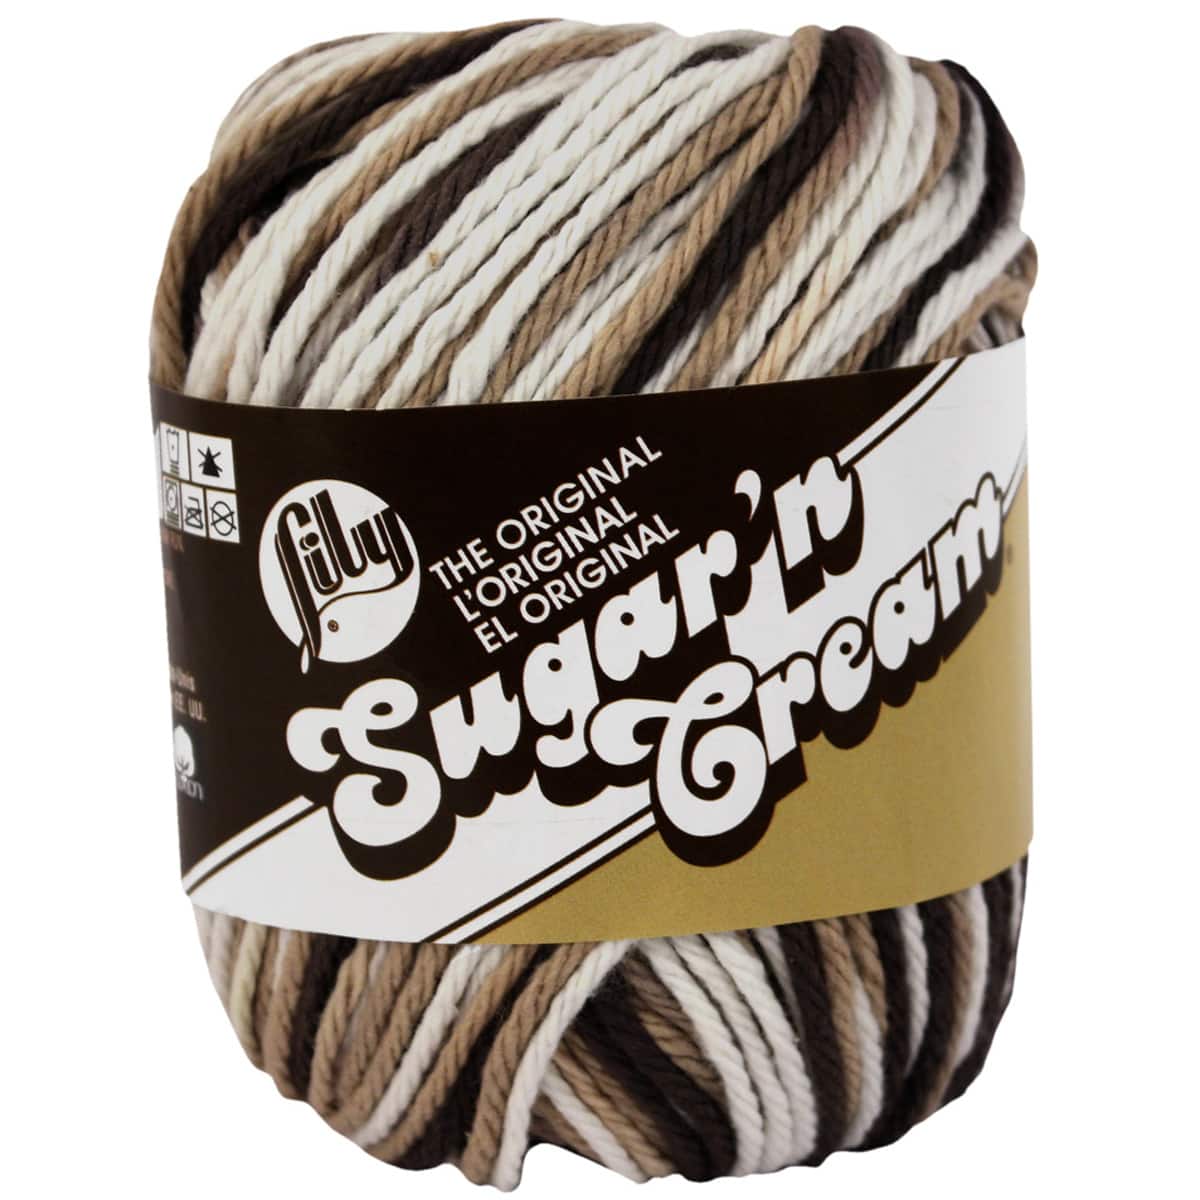 Lily Sugar'n Cream® The Original Ombre #4 Medium Cotton Yarn, Queen Anns  Lace 12oz/340g, 608 Yards 